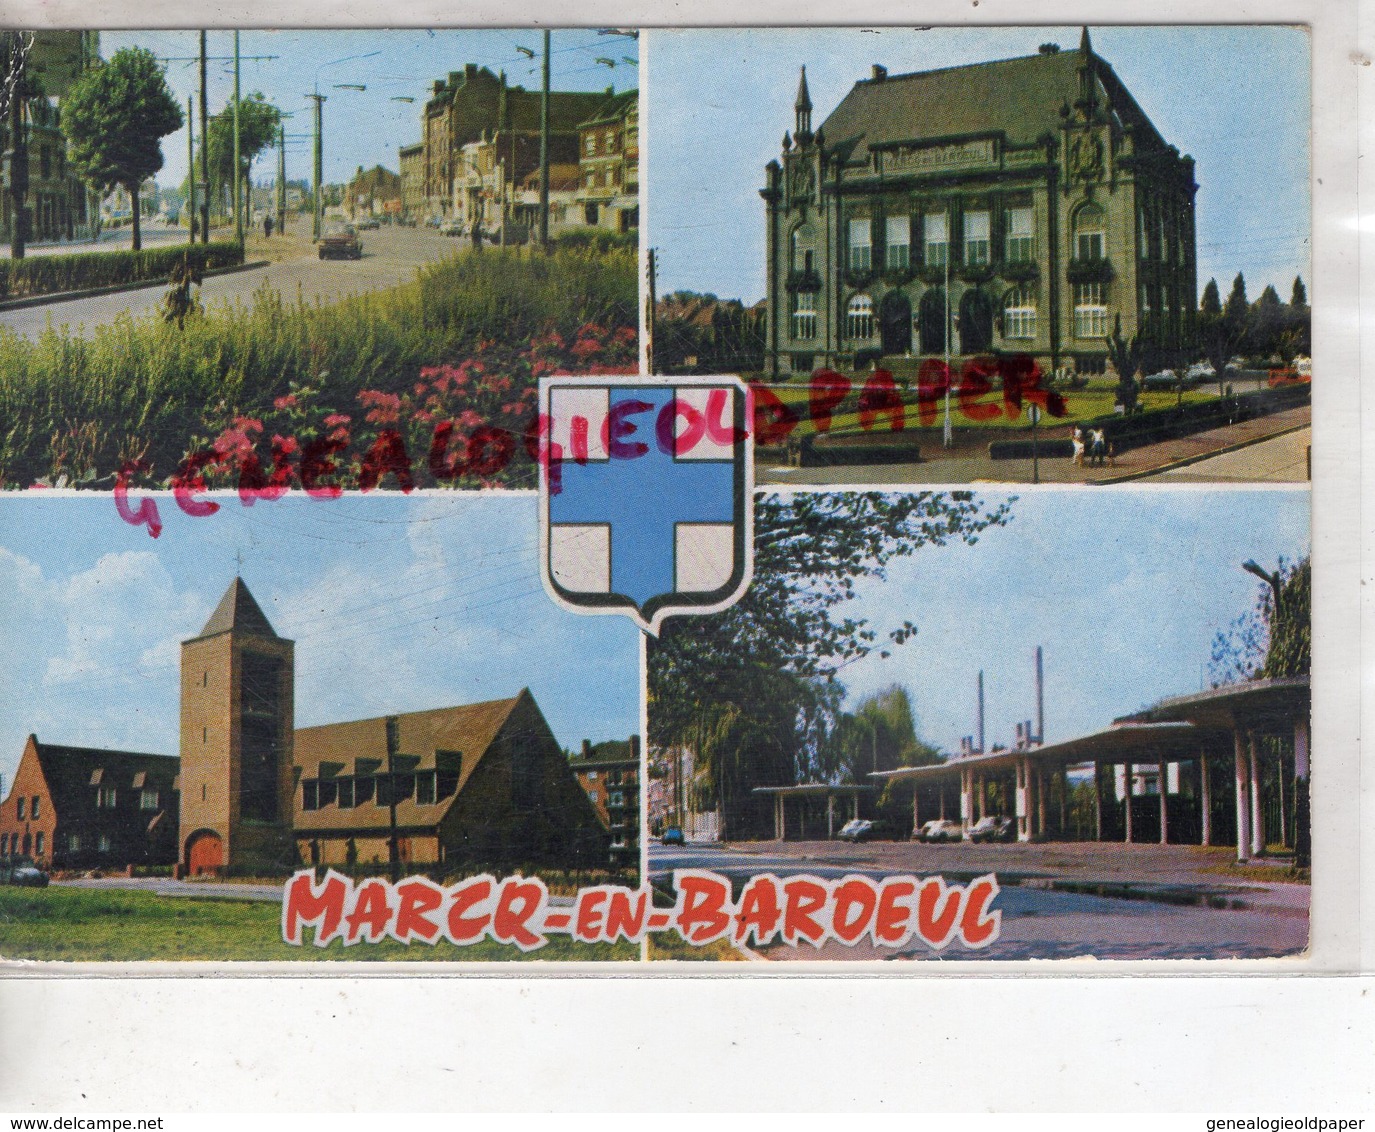 59 - MARCQ EN BAROEUL - LE CROISE LAROCHE- HOTEL DE VILLE-EGLISE SAINT PAUL-HIPPODROME DES FLANDRES -1969 - Marcq En Baroeul